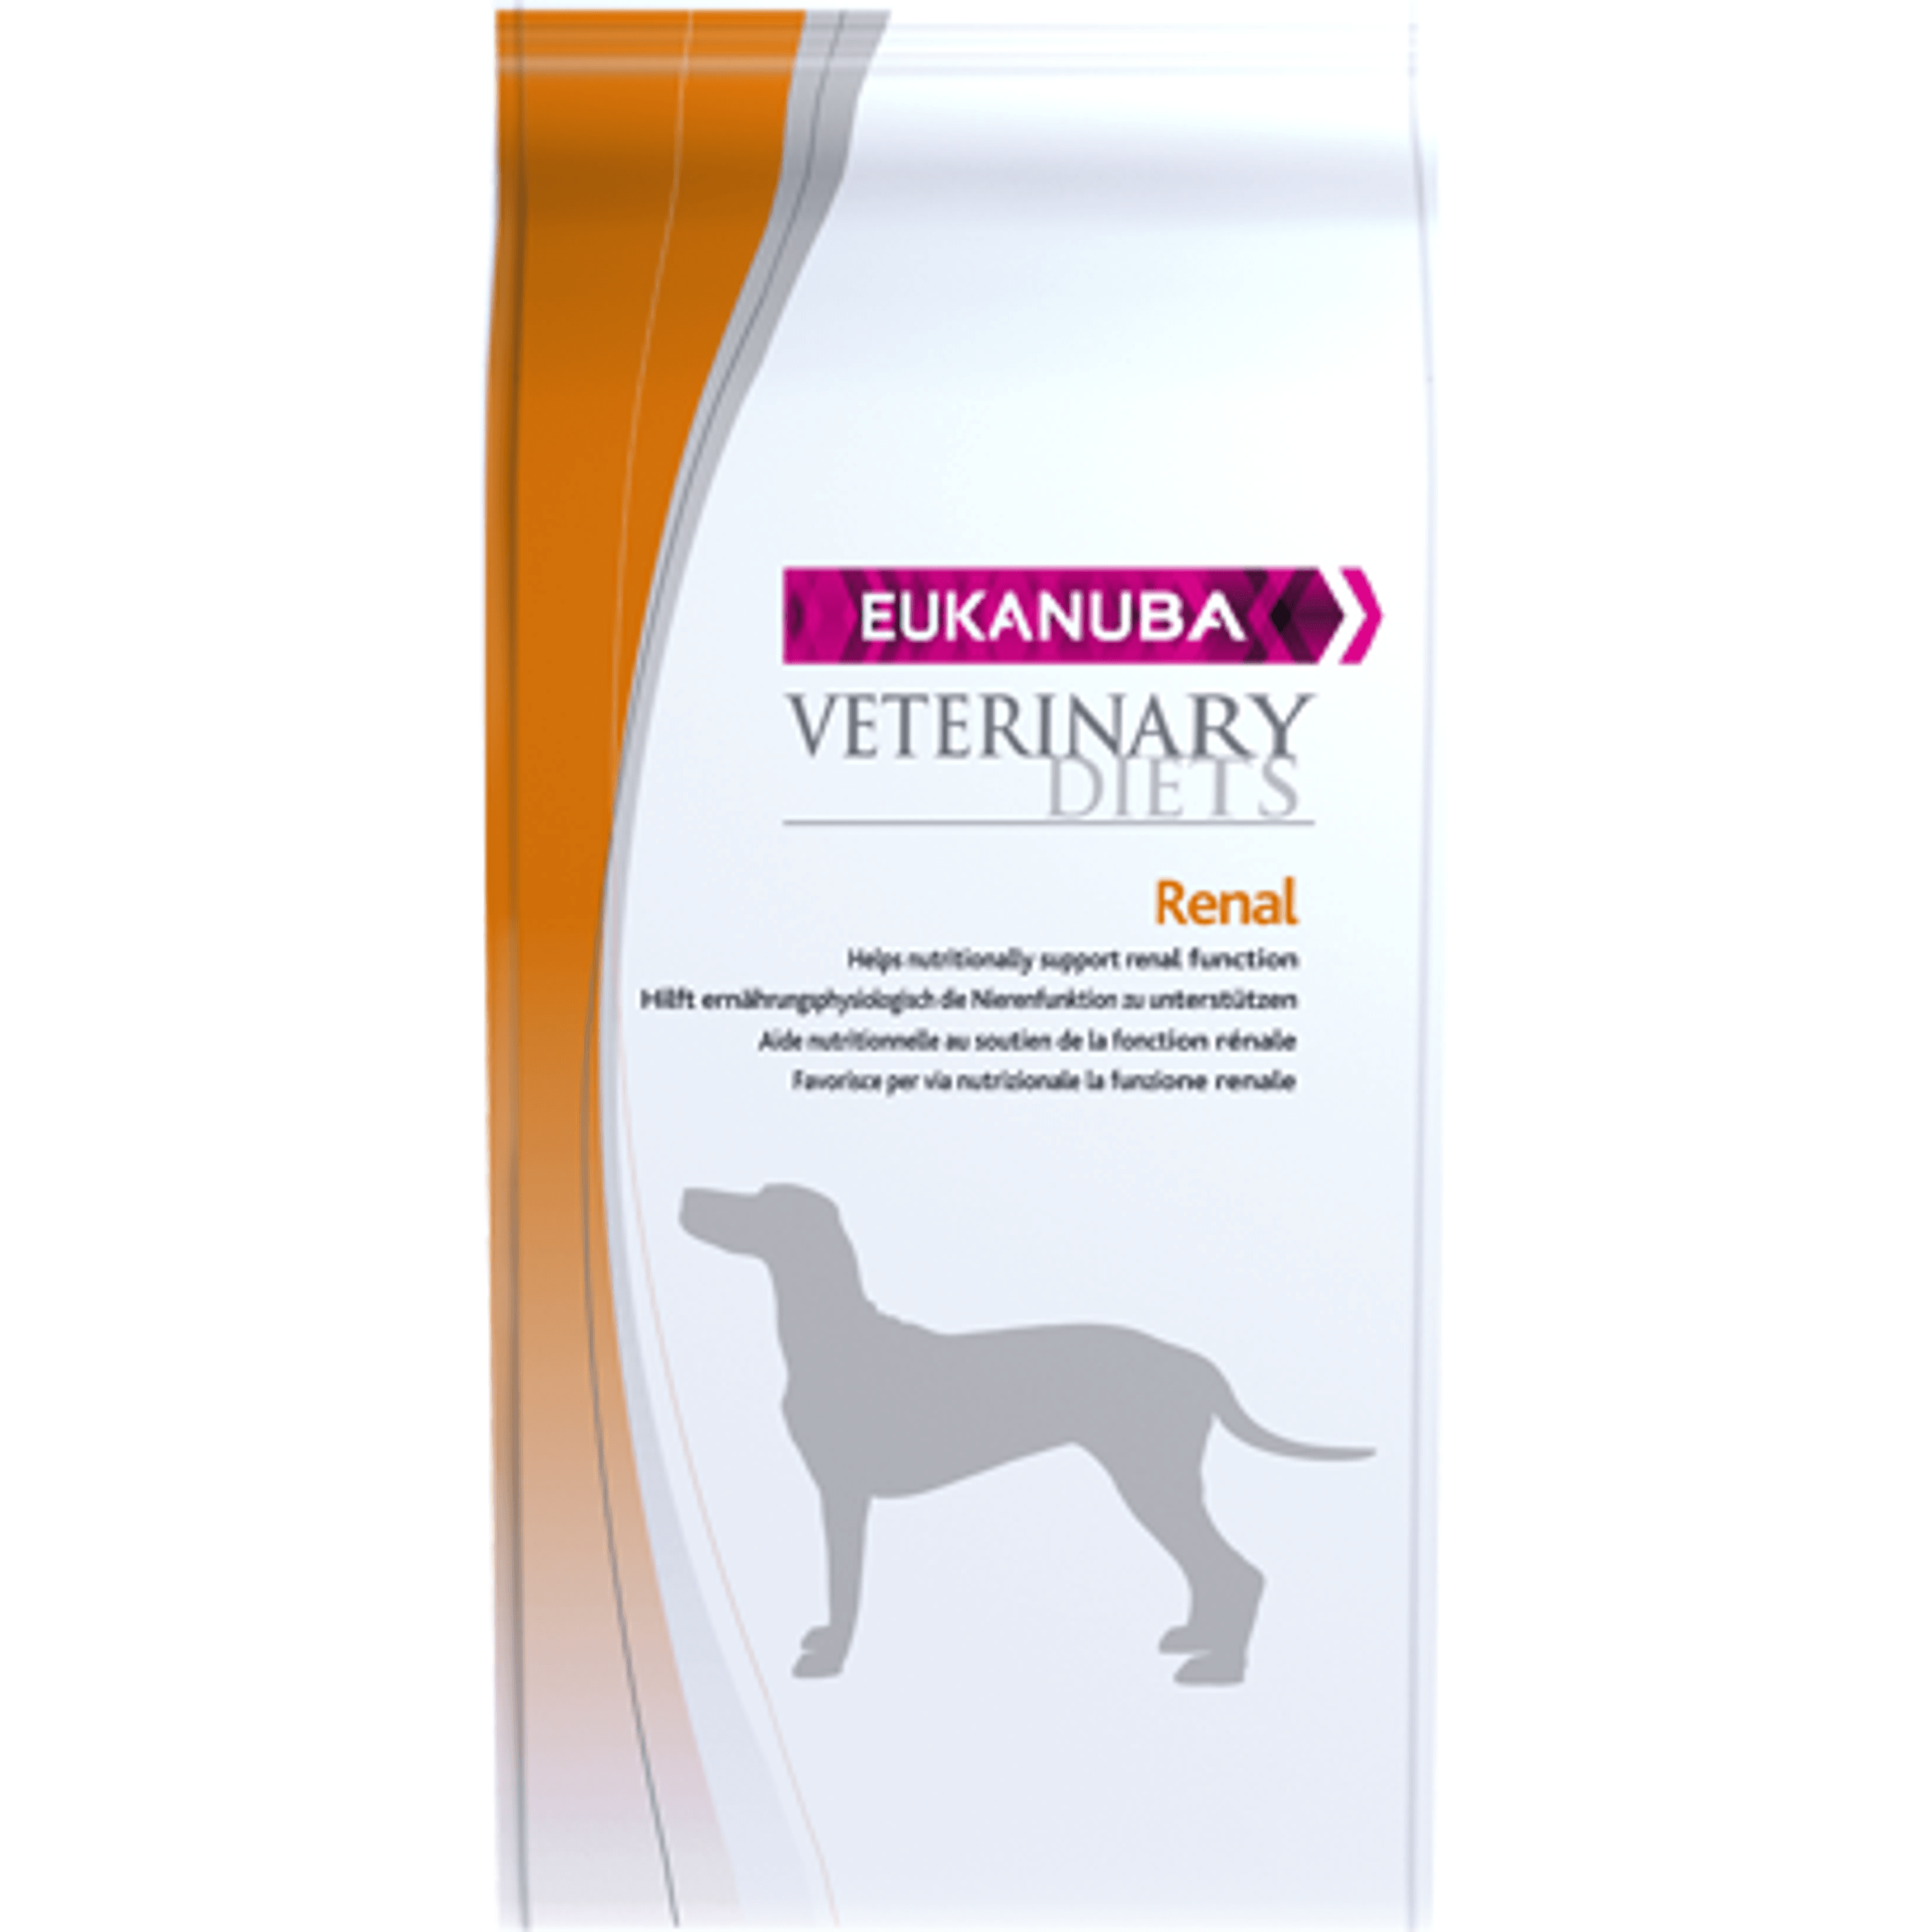 Корм для собак renal. Eukanuba Veterinary Diets для собак. Ветеринарный корм для собак Ренал. Эукануба Ренал. Veterinary Diet Cat renal от Eukanuba.